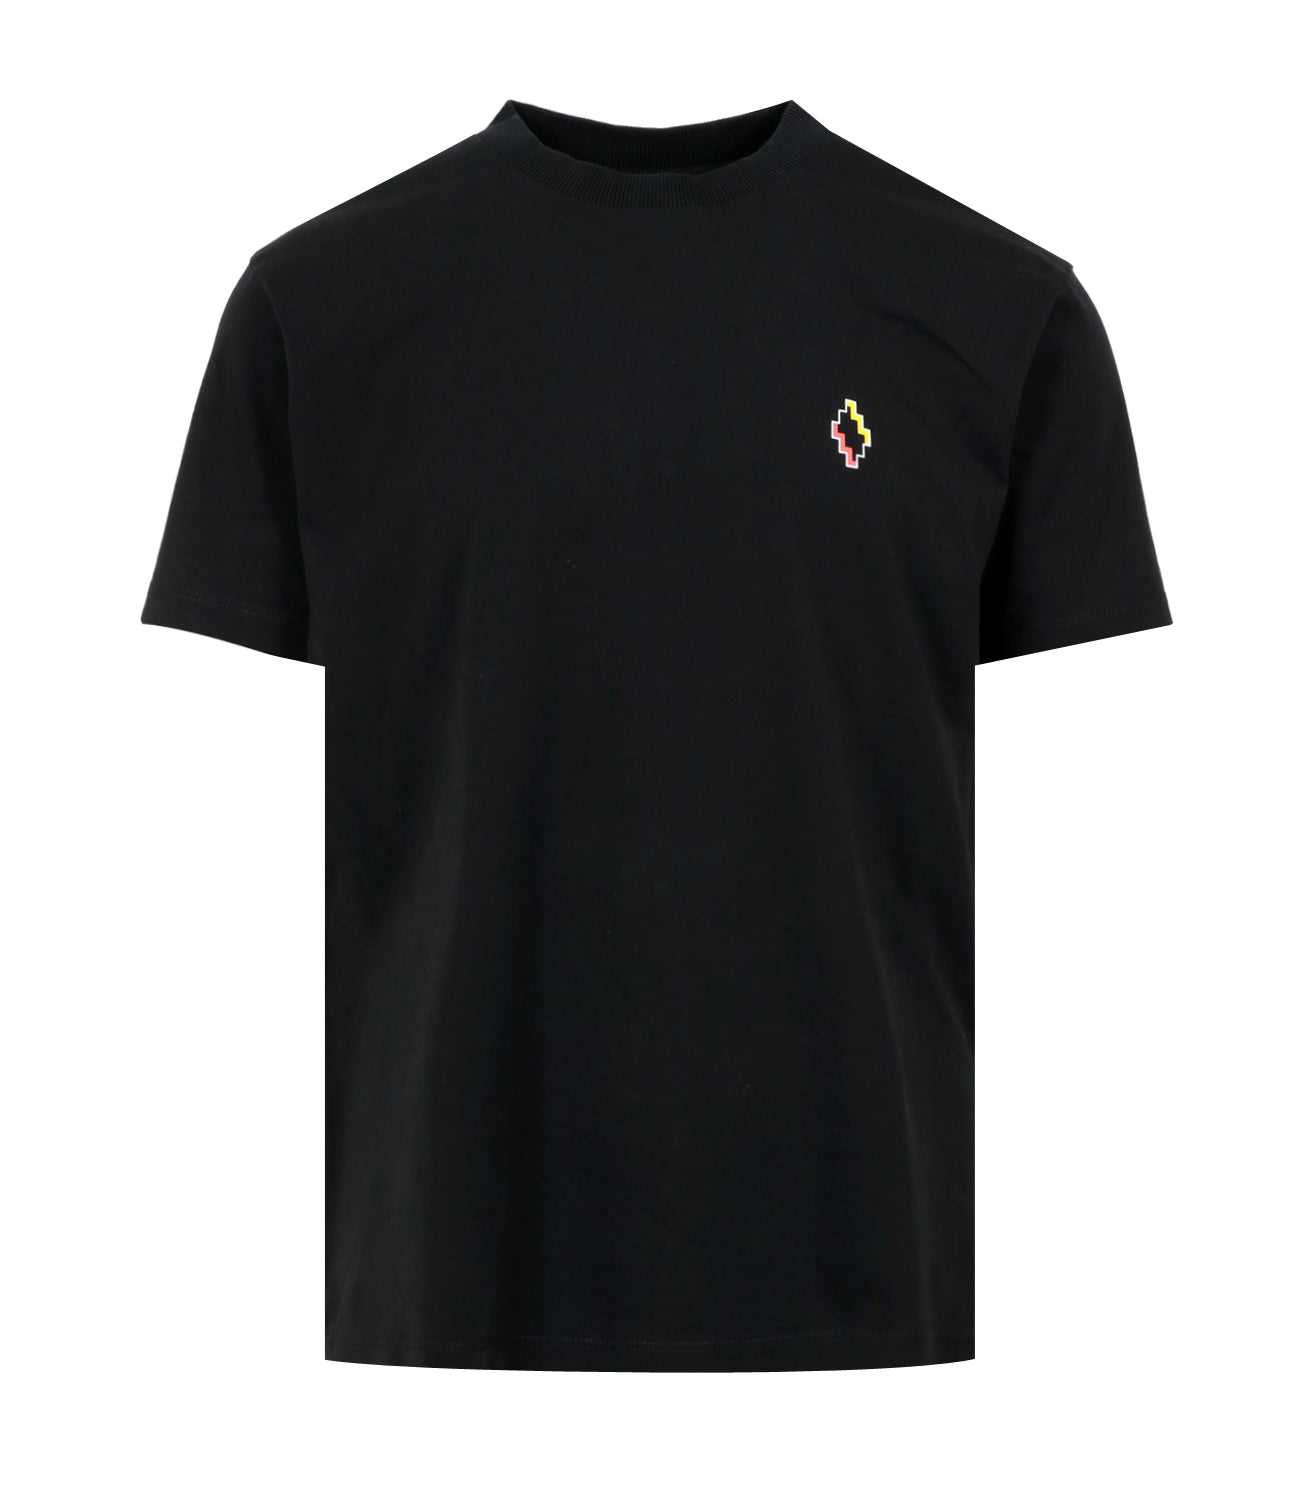 Marcelo Burlon | T-Shirt Conty Club Black and Yellow